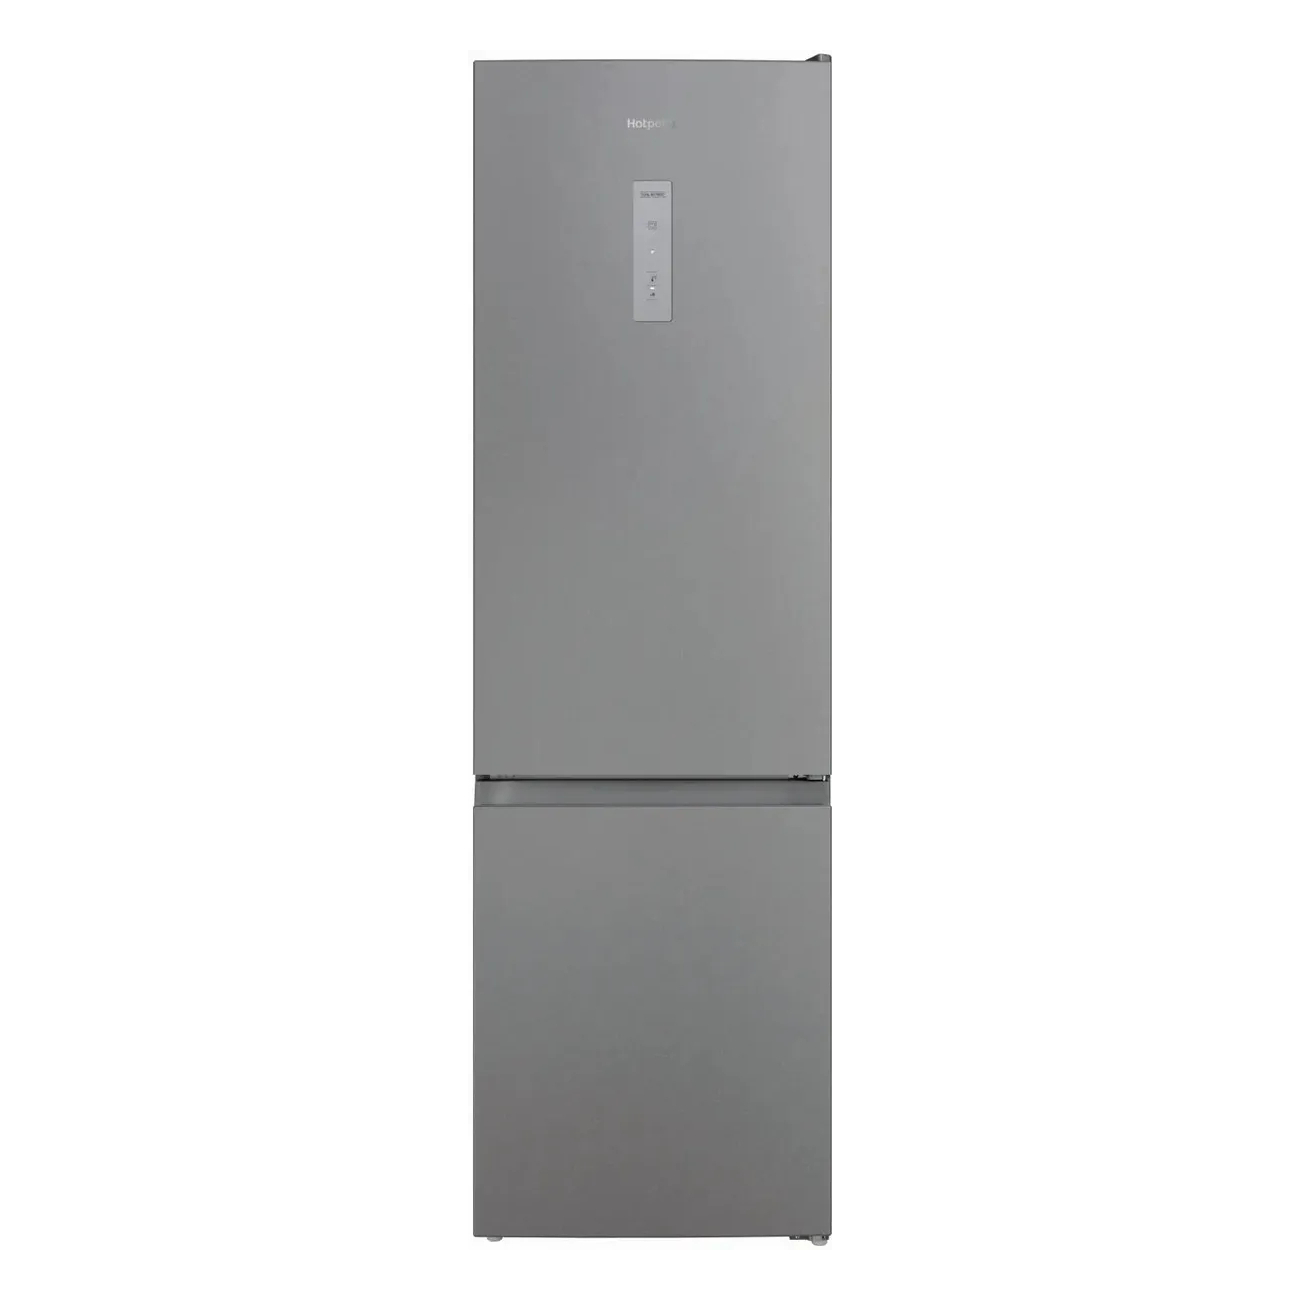 Холодильник HotPoint HT 5200 S серебристый двухкамерный холодильник hotpoint ht 4200 s серебристый